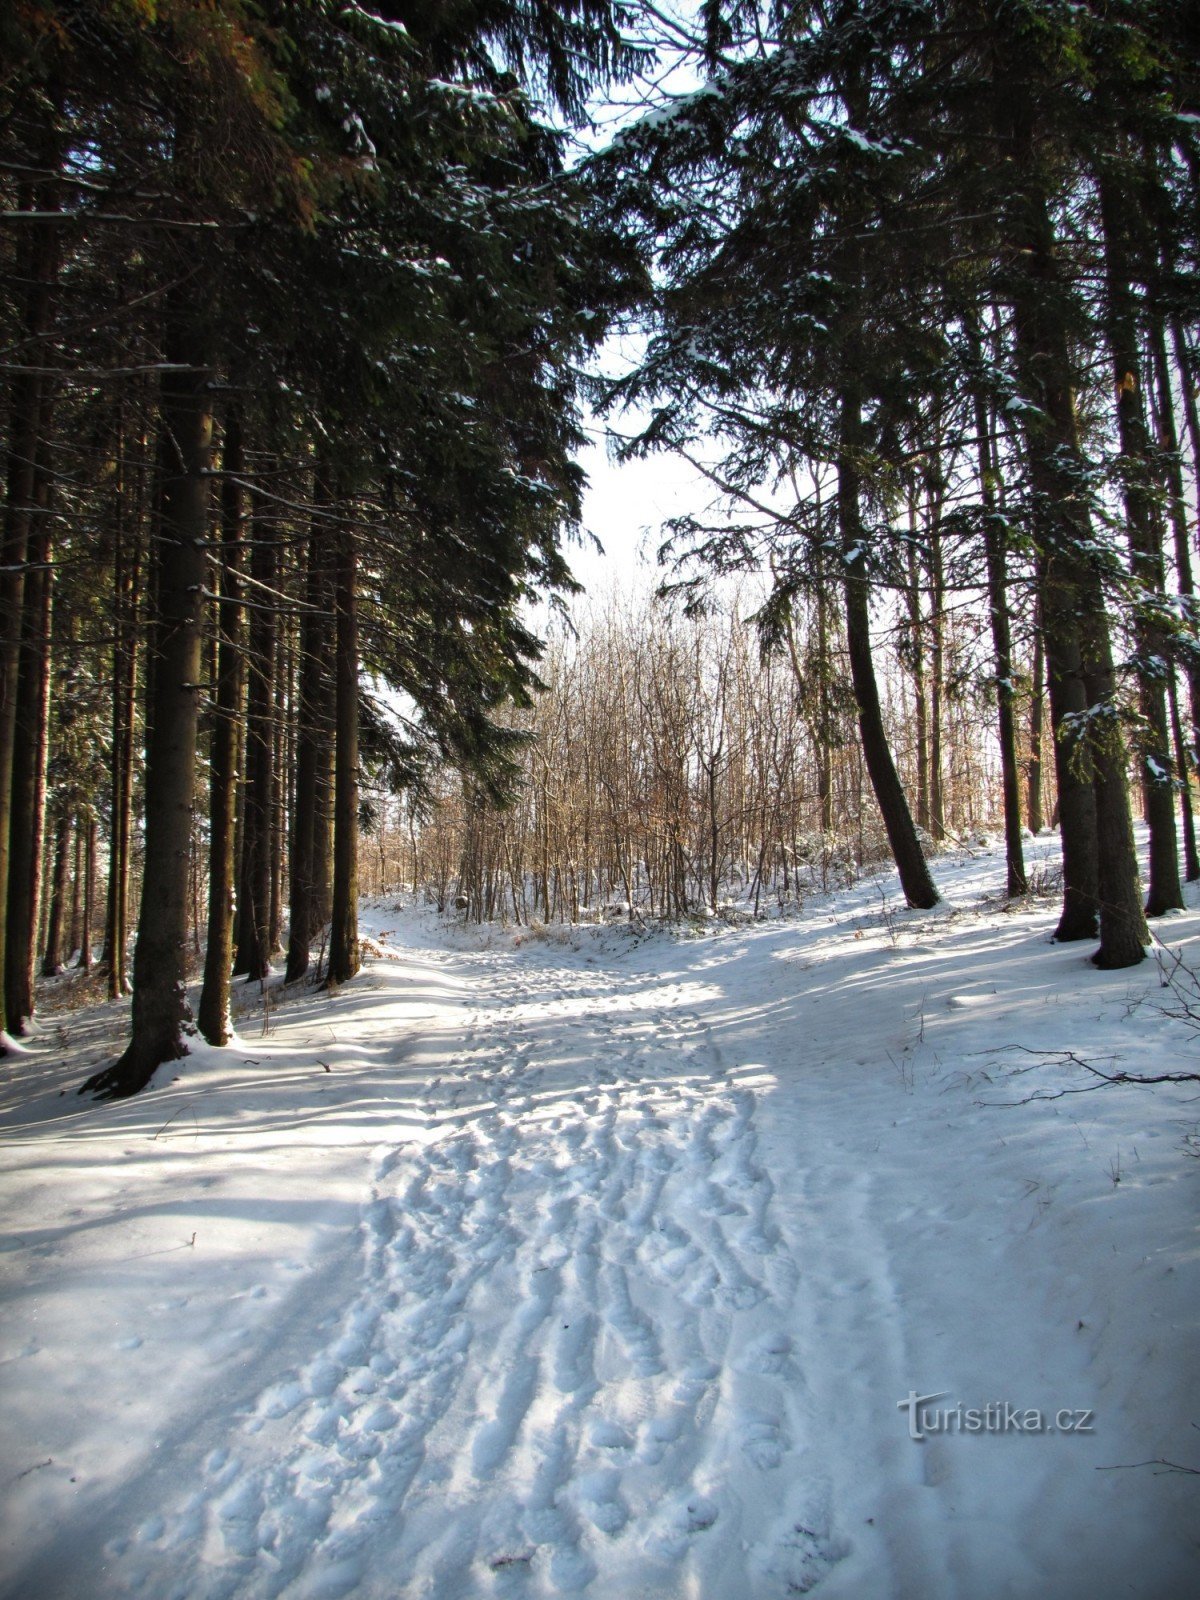 entlang des verschneiten Kamms in Richtung Vartovna